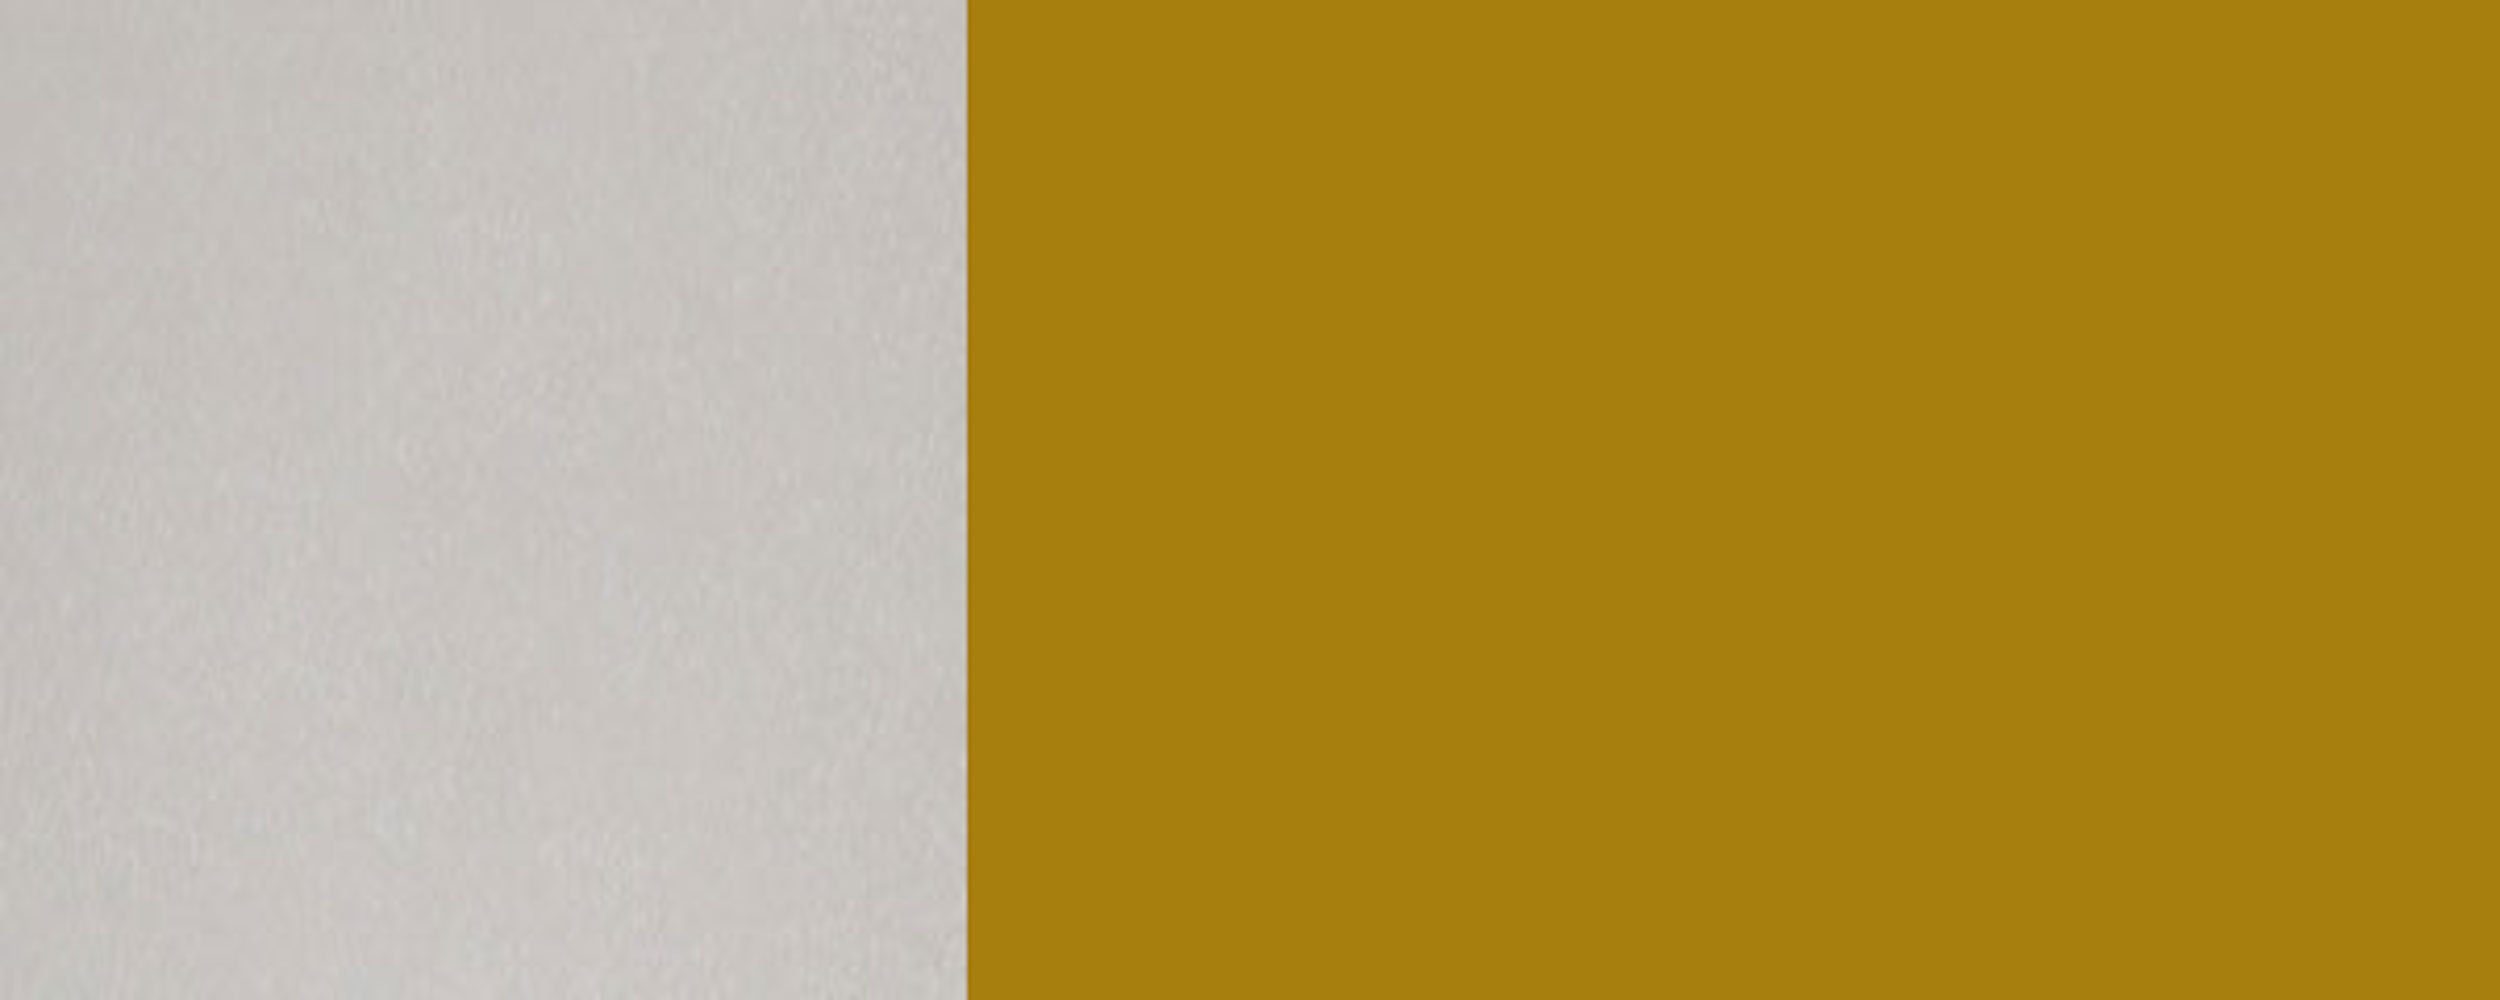 60cm Feldmann-Wohnen Sockelblende matt RAL Rimini, wählbar 1027 teilintegriert Sockelfarbe currygelb Front- und